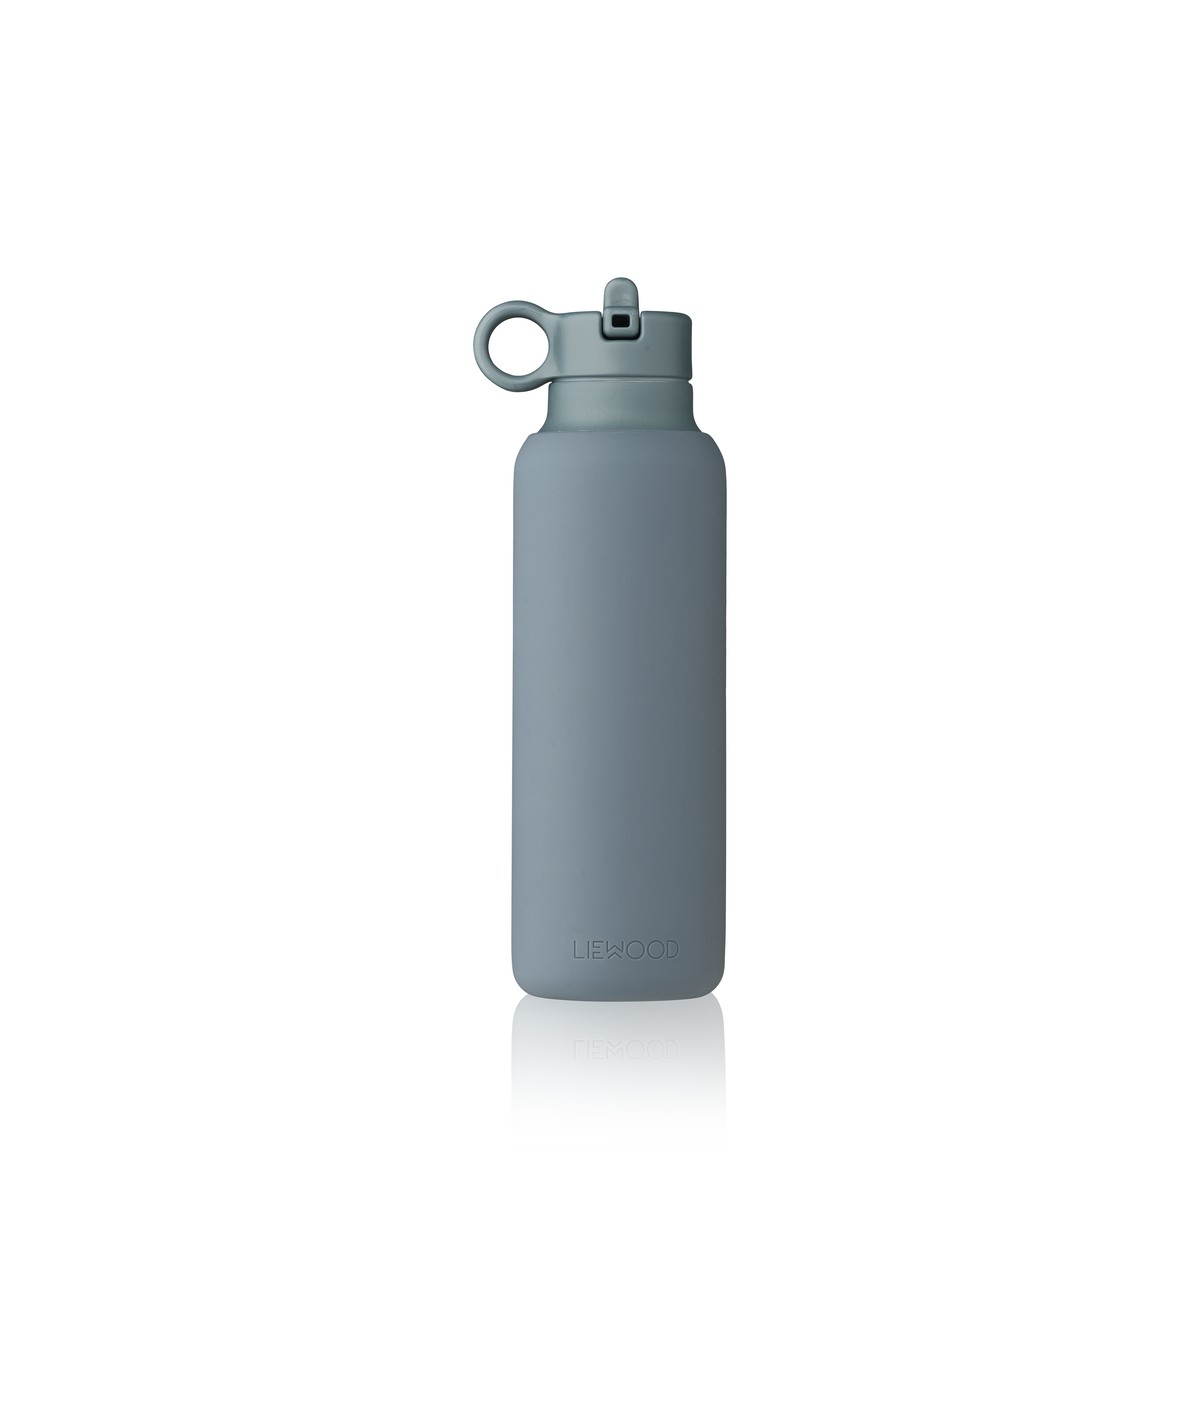 Botella Termica, Capacidad De 500 ML. Libre BPA, Acero Inoxidable,  Antigoteo